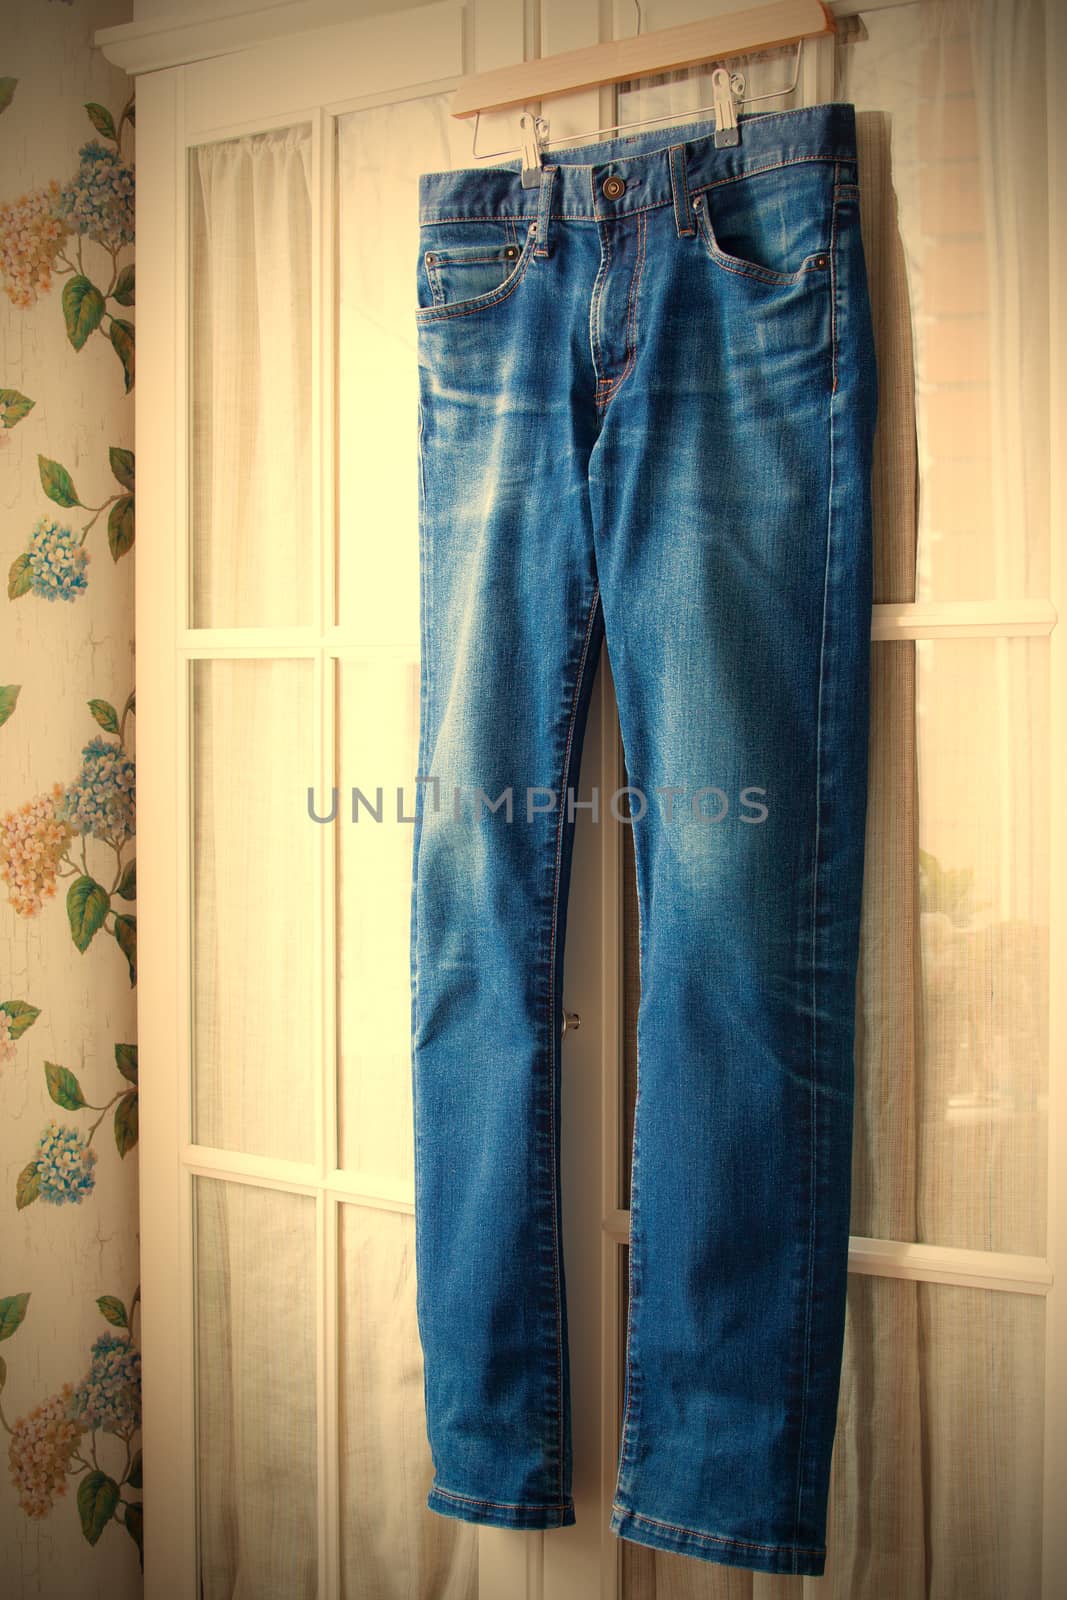 jeans on hangers on the door wardrobes. instagram image retro style